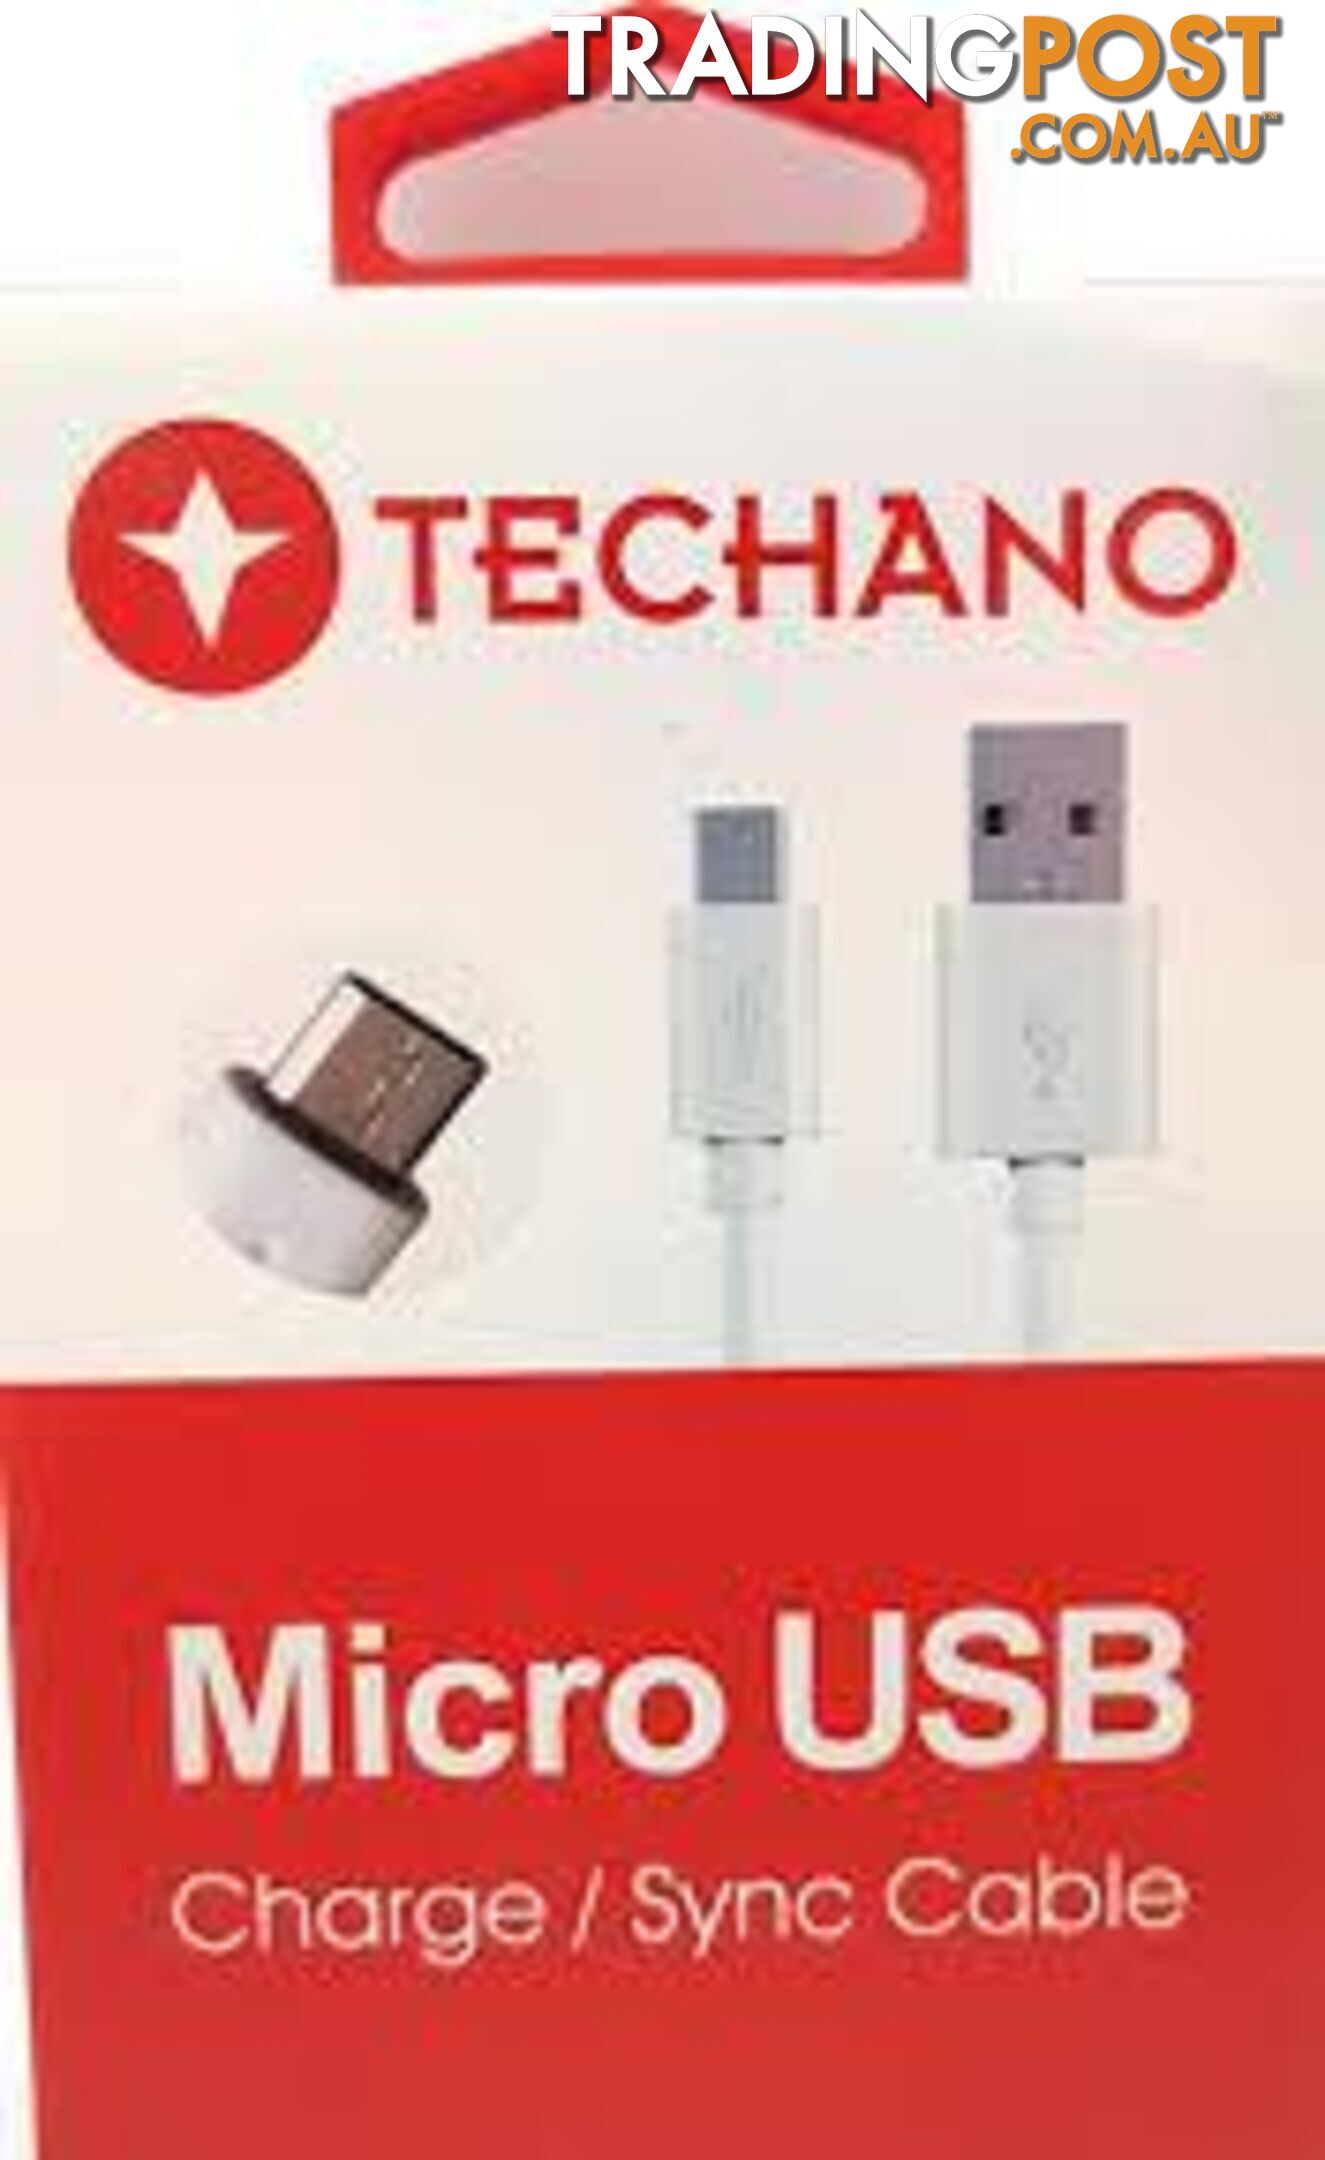 Techano Micro USB Charge / Sync Cable - E3B432 - Cables